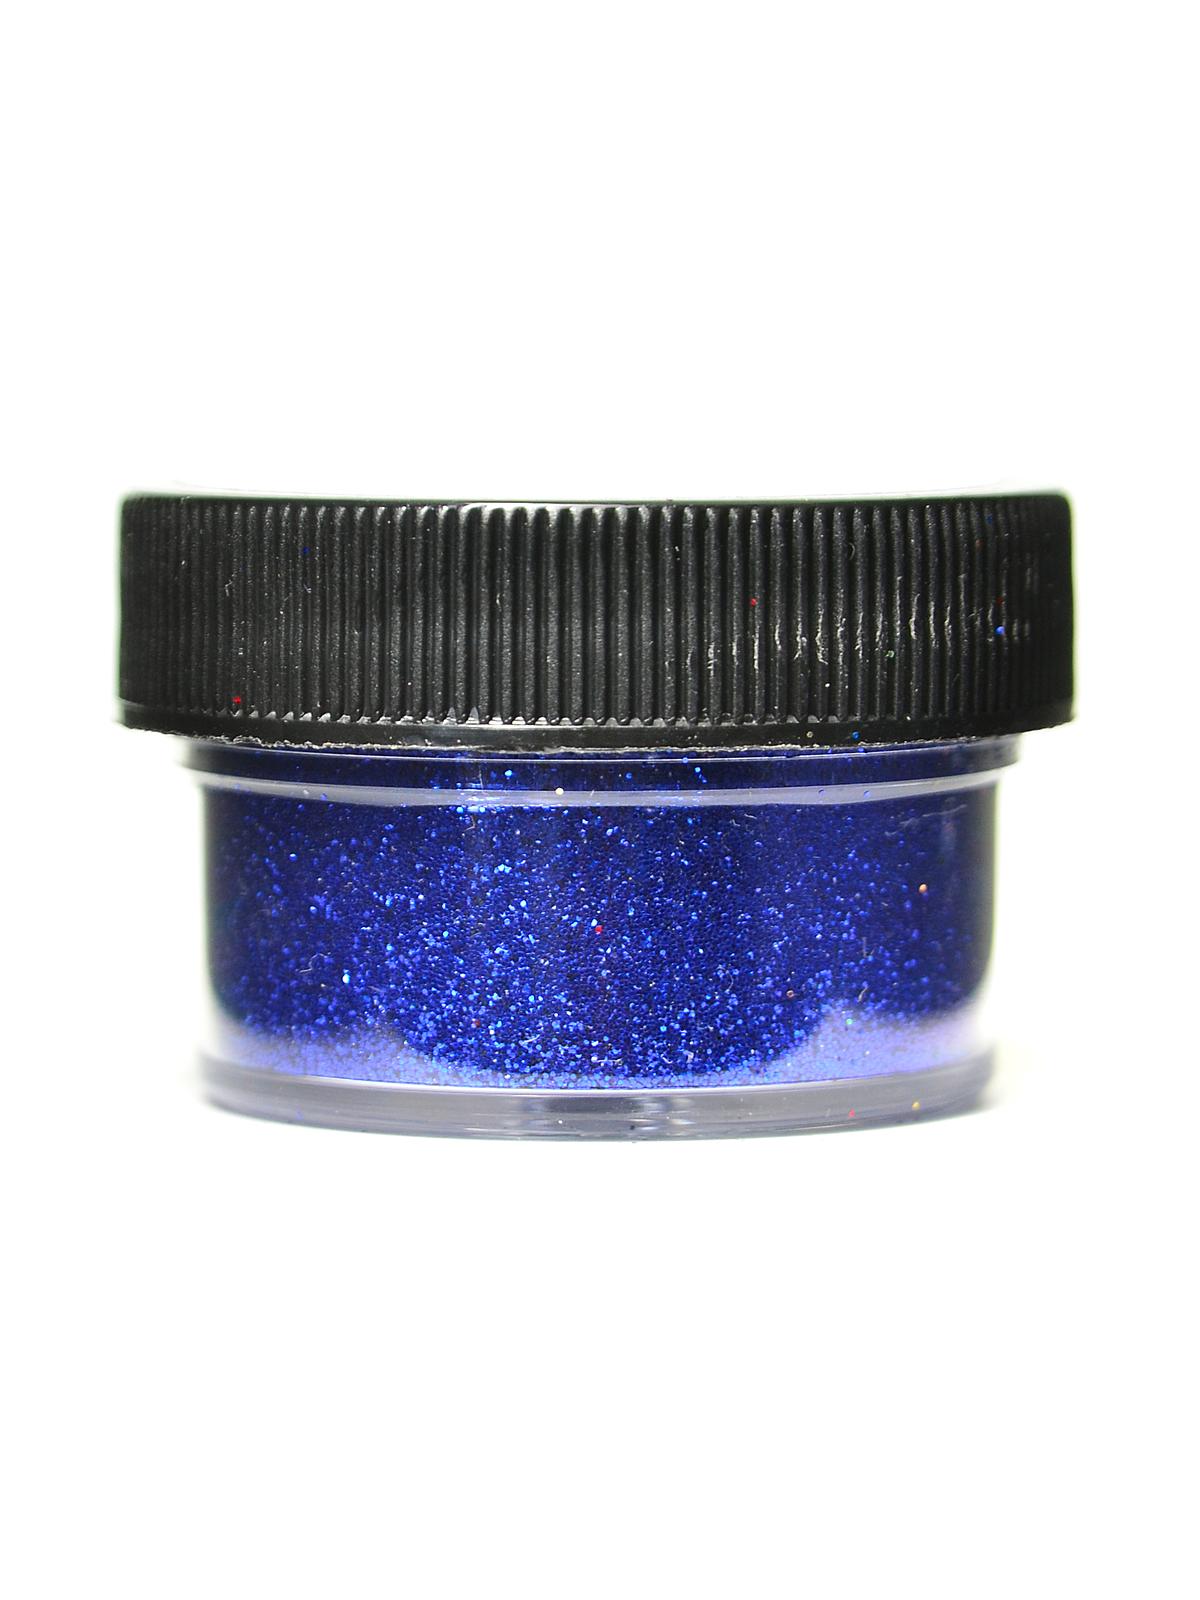 Ultrafine Opaque Glitter Canadian Blue 1 2 Oz. Jar